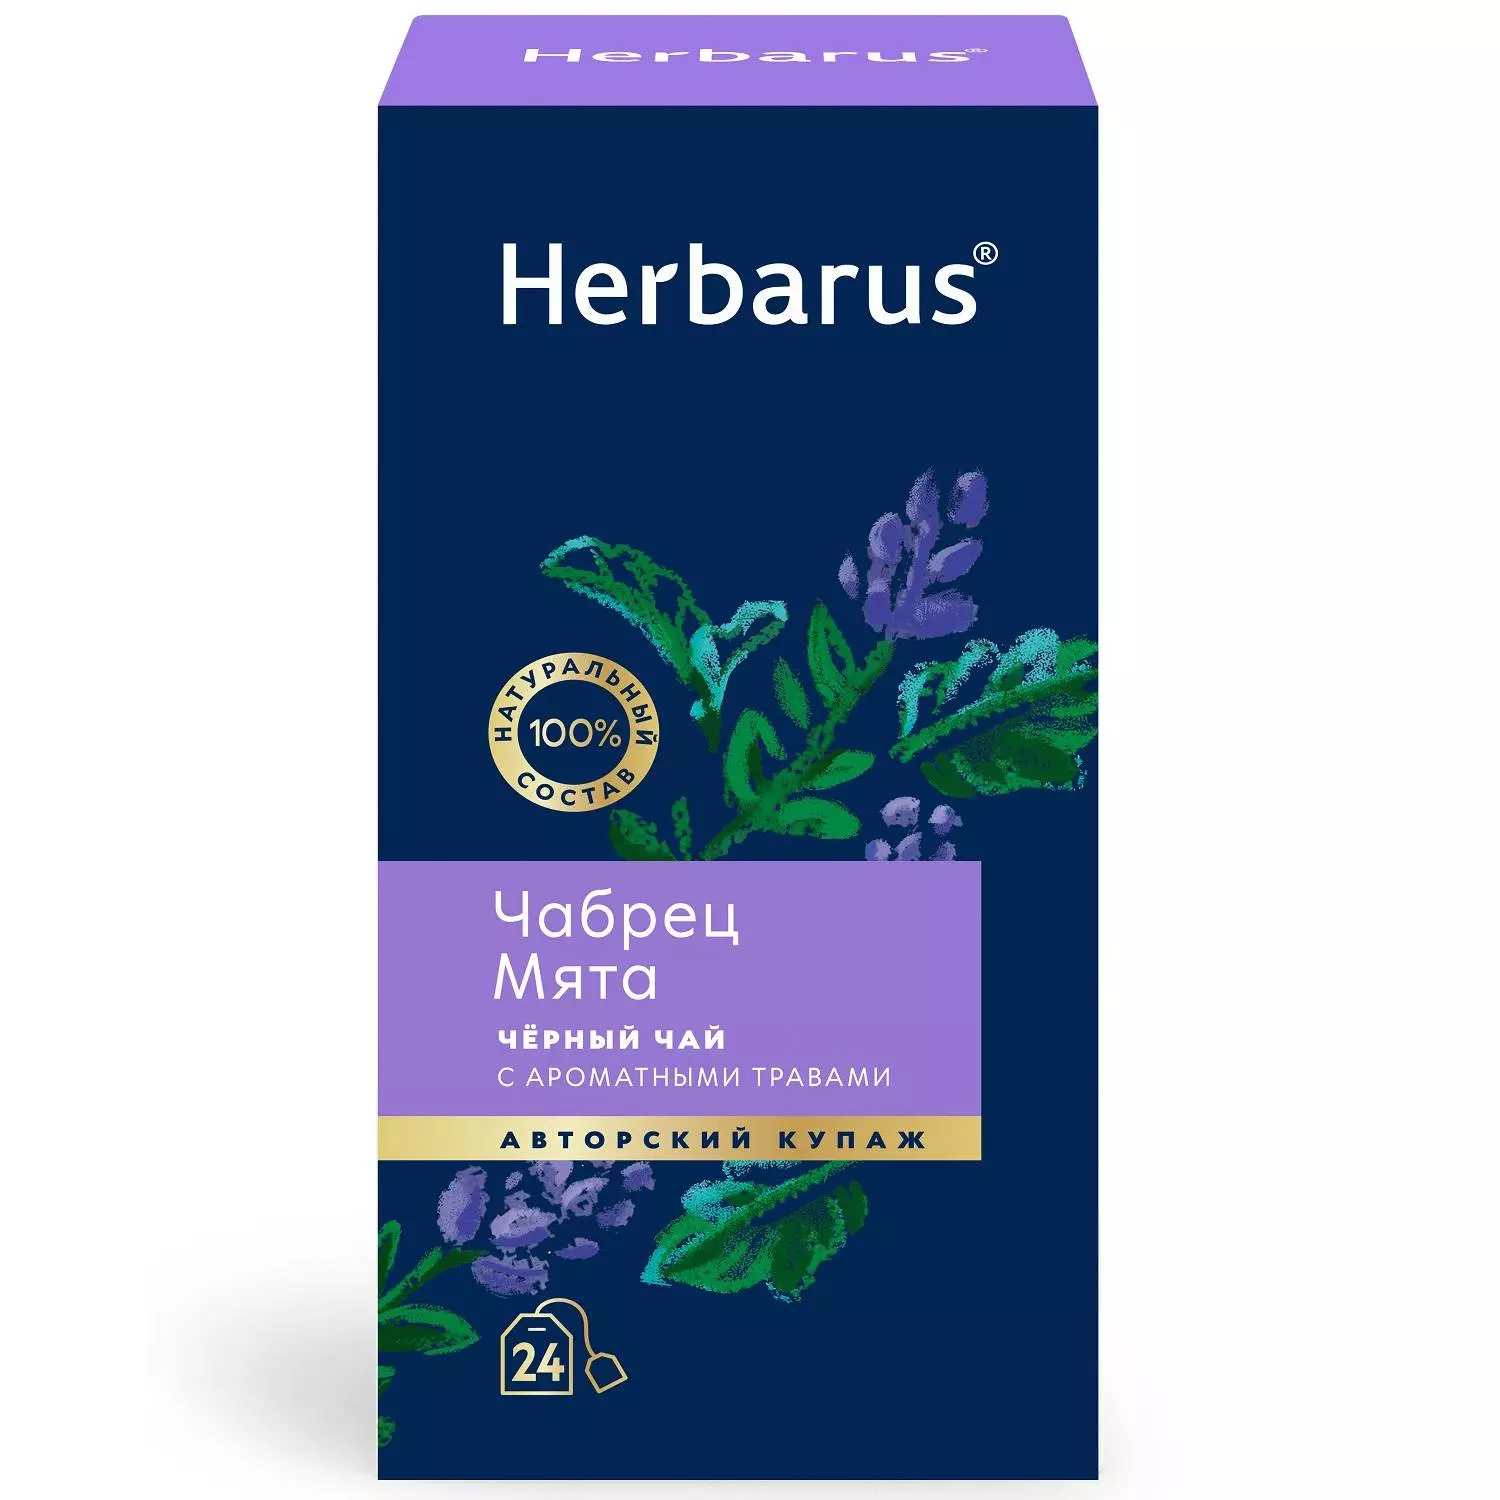 Чай черный Herbarus чабрец мята с ароматными травами, 24 пакетика